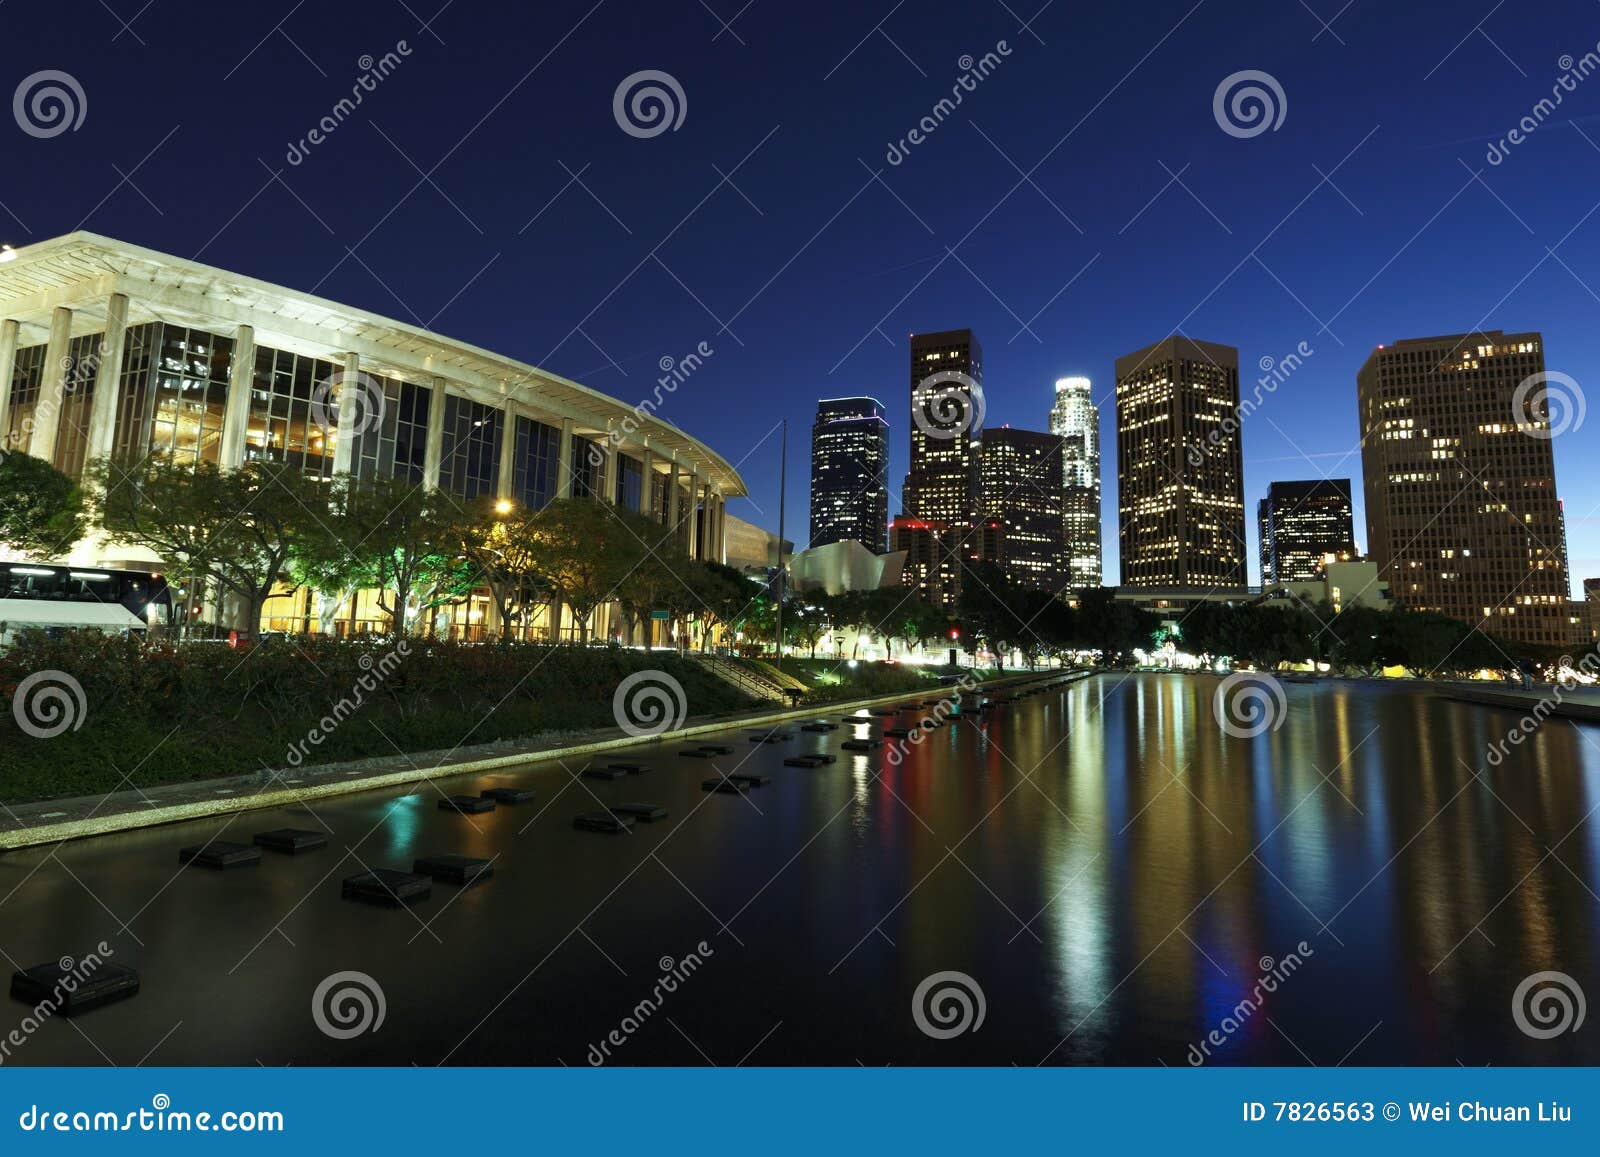 Los Angeles at night stock image. Image of beautiful, metropolitan